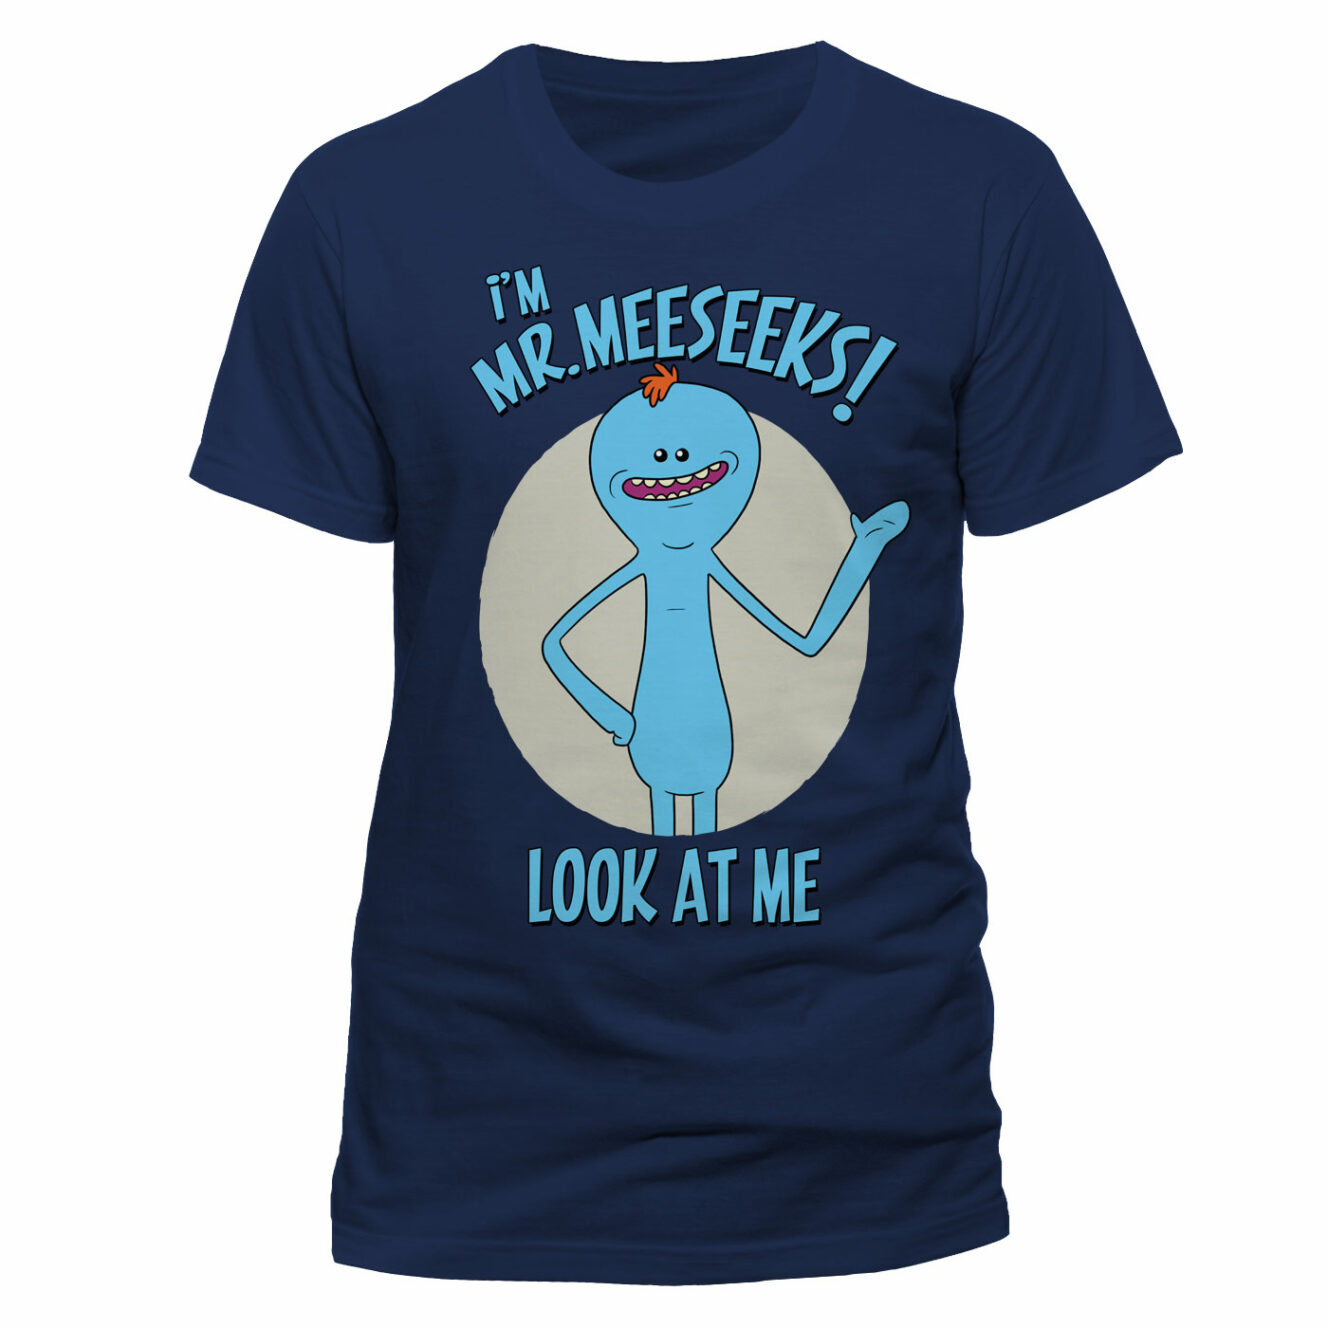 Rick-&-Morty-MrMeeseeks-T-shirt